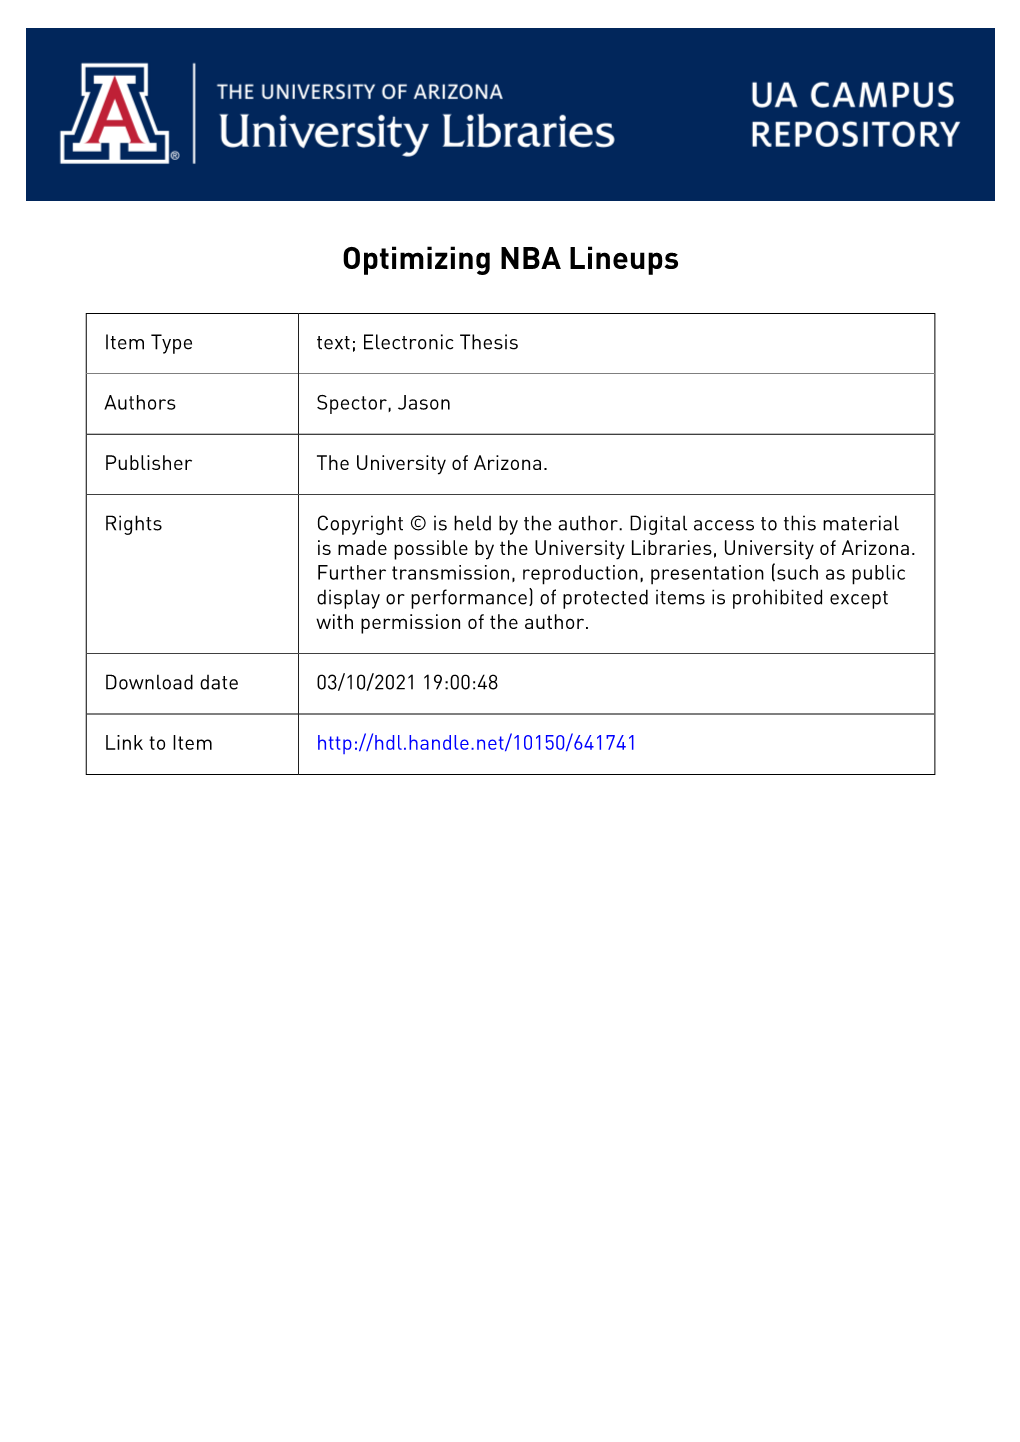 OPTIMIZING NBA LINEUPS by Jason Spector